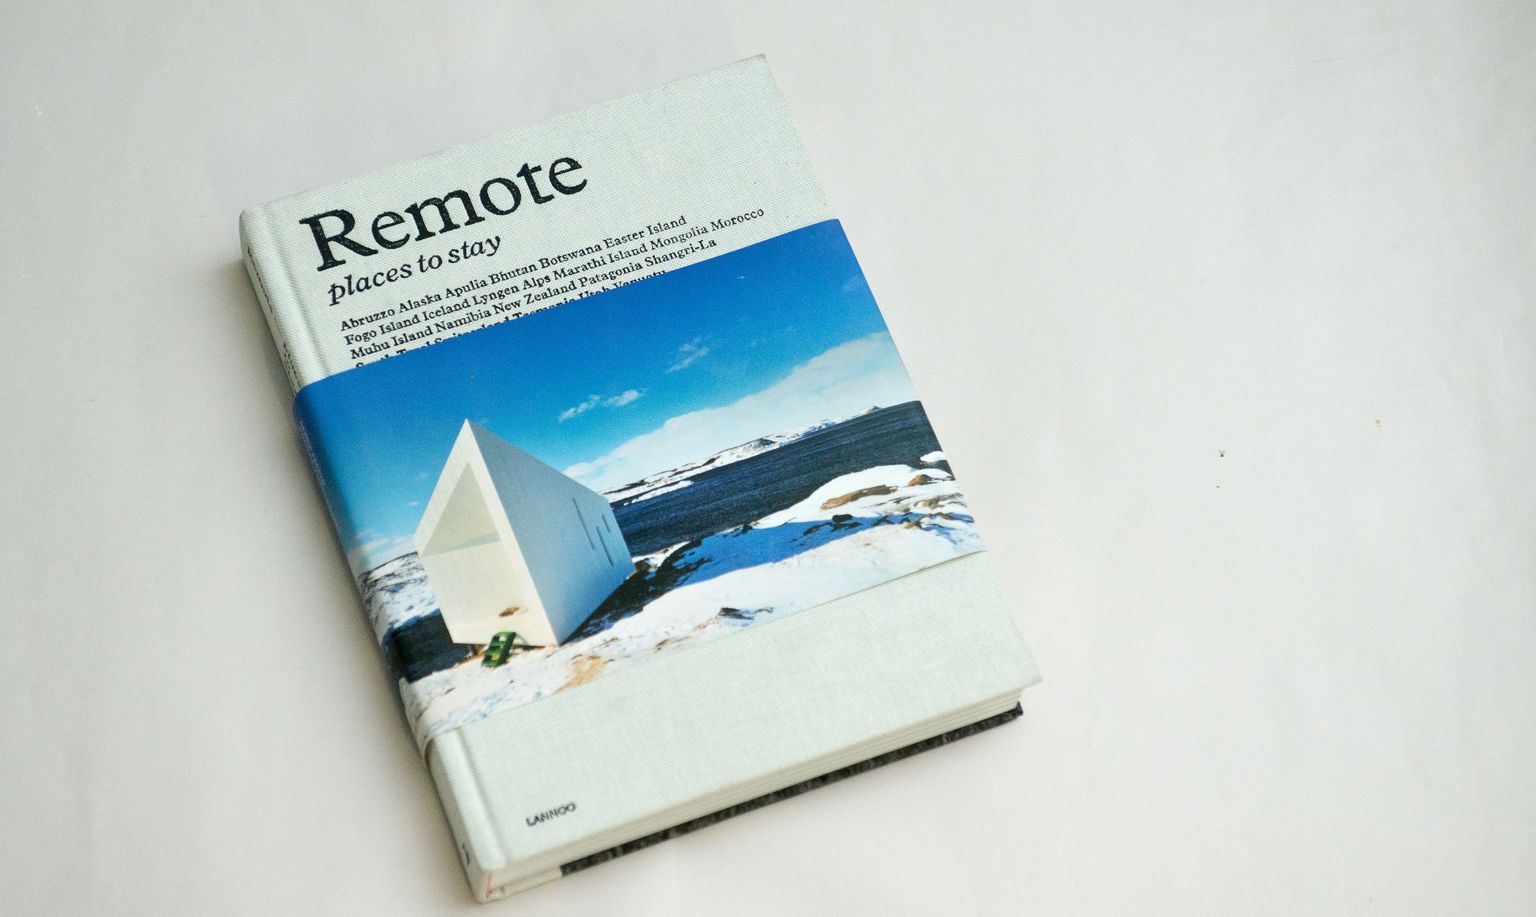 TALLINN, EESTI, 09DEC14.Pildil raamat "Remote places to stay"tl/Foto TAIRO LUTTER/POSTIMEES